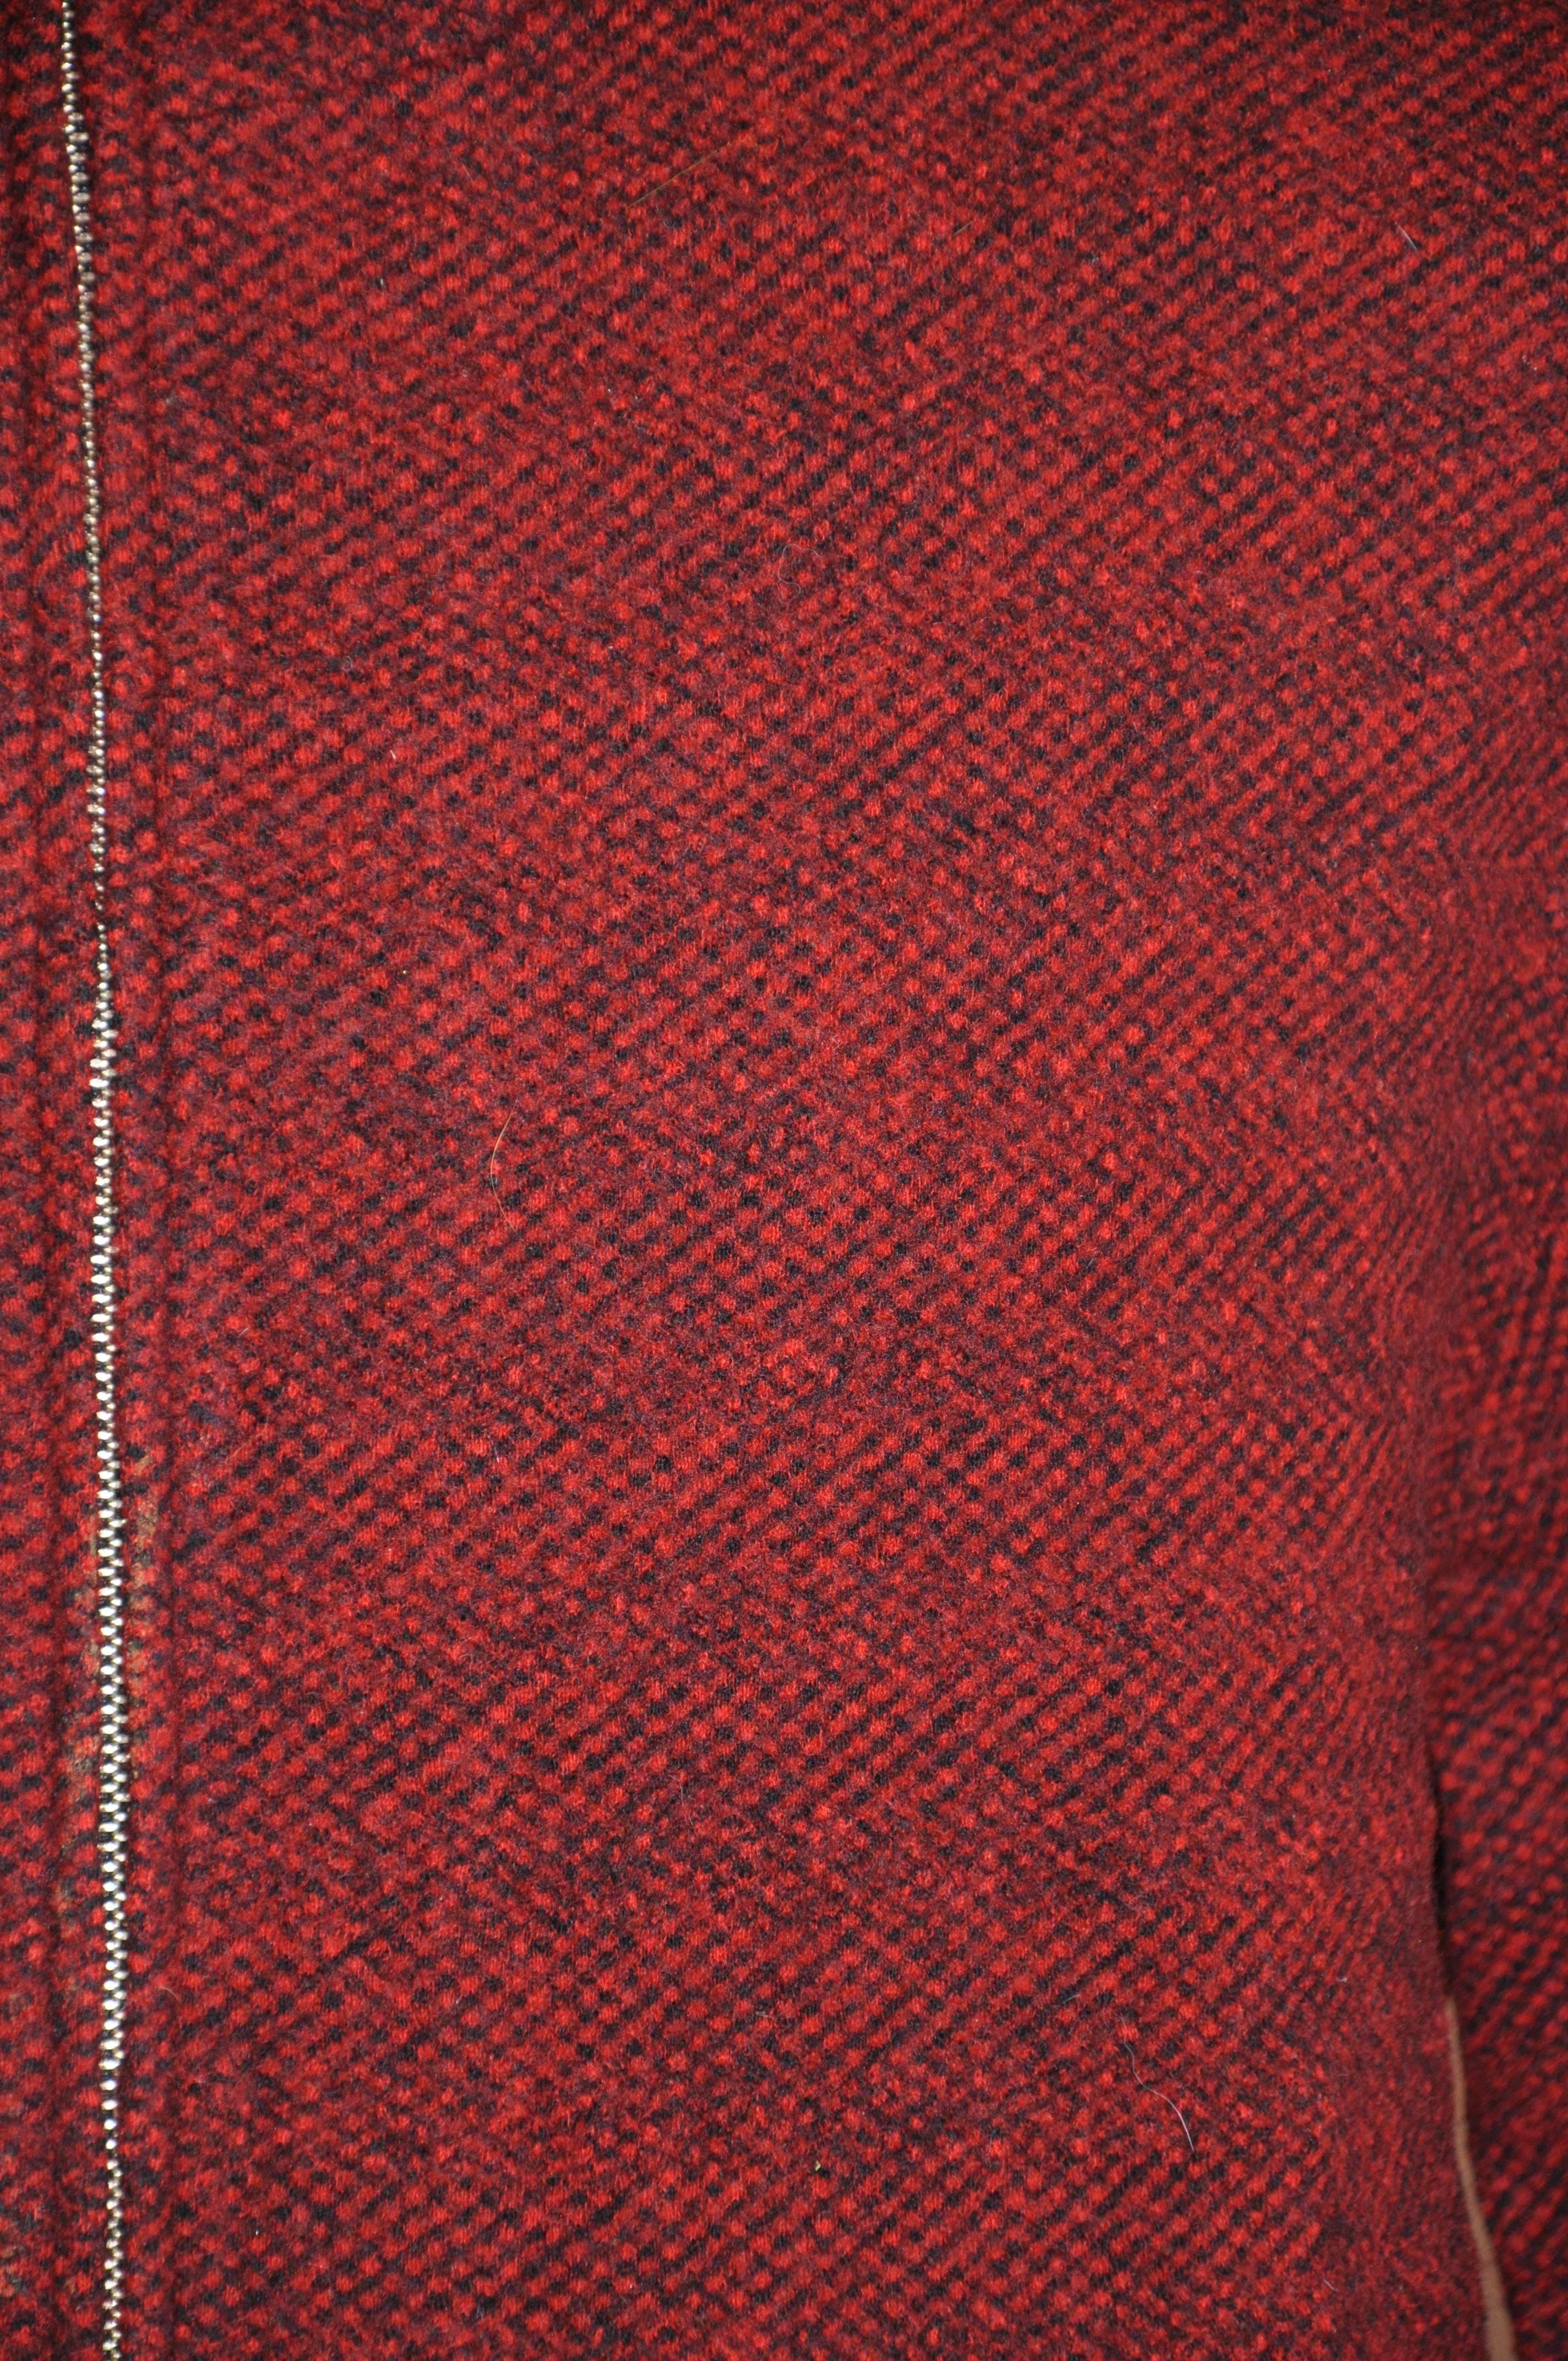 Yohji Yamamoto Men's Black and Red Wool Zipper Front Jacket with ...